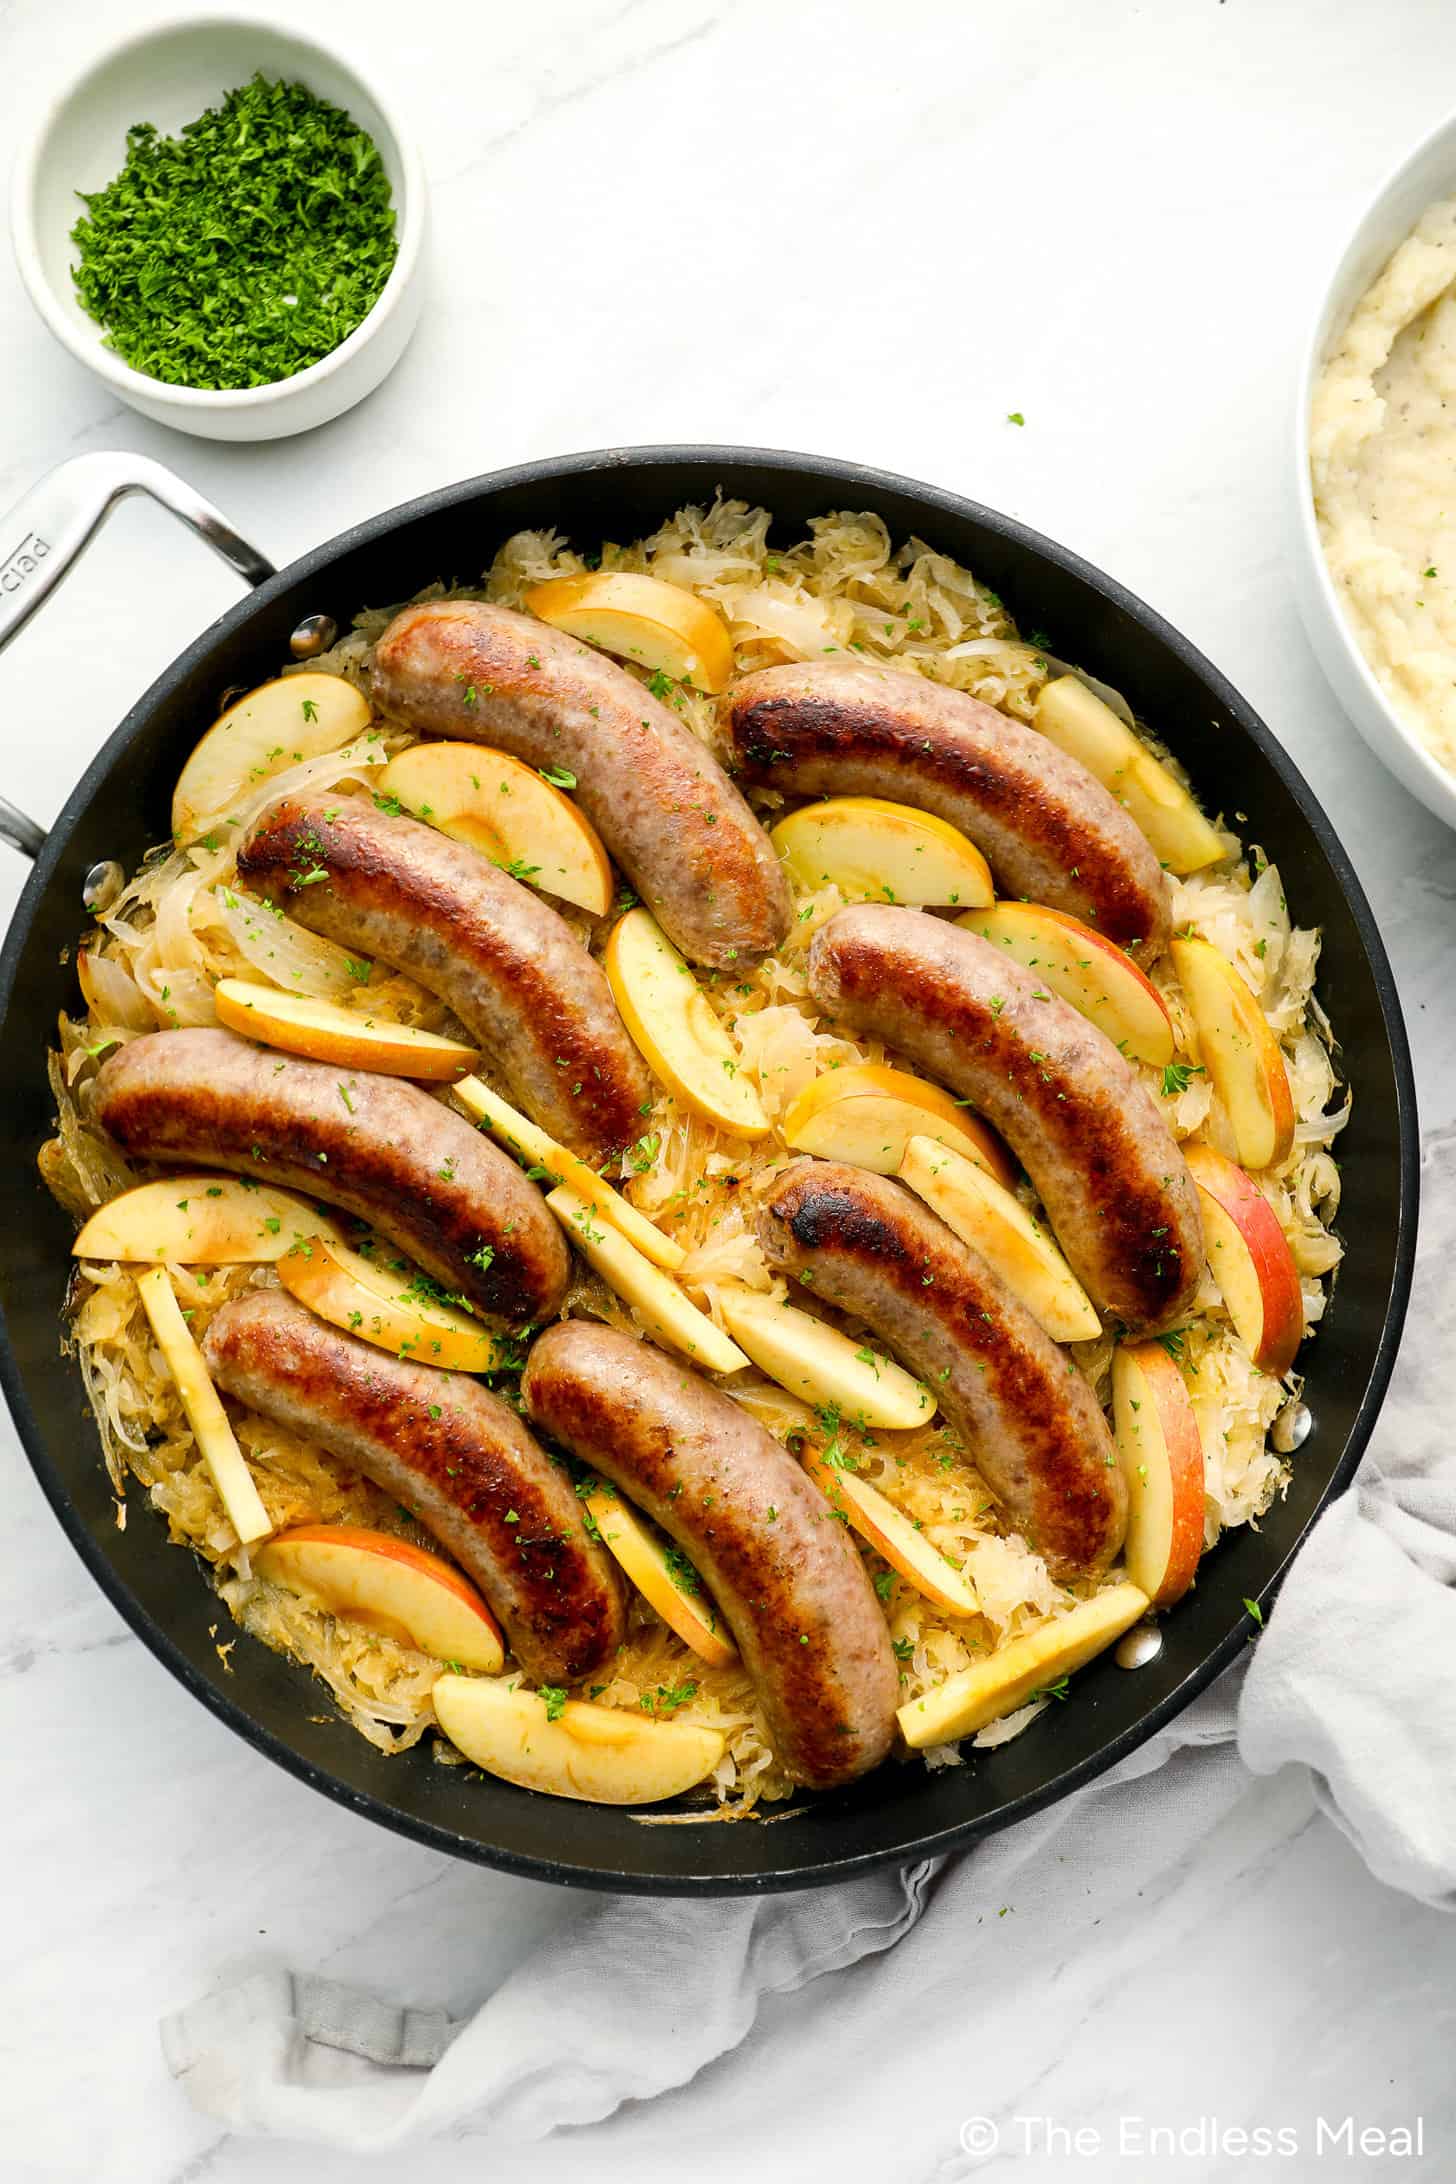 Bratwurst and Sauerkraut in a pan